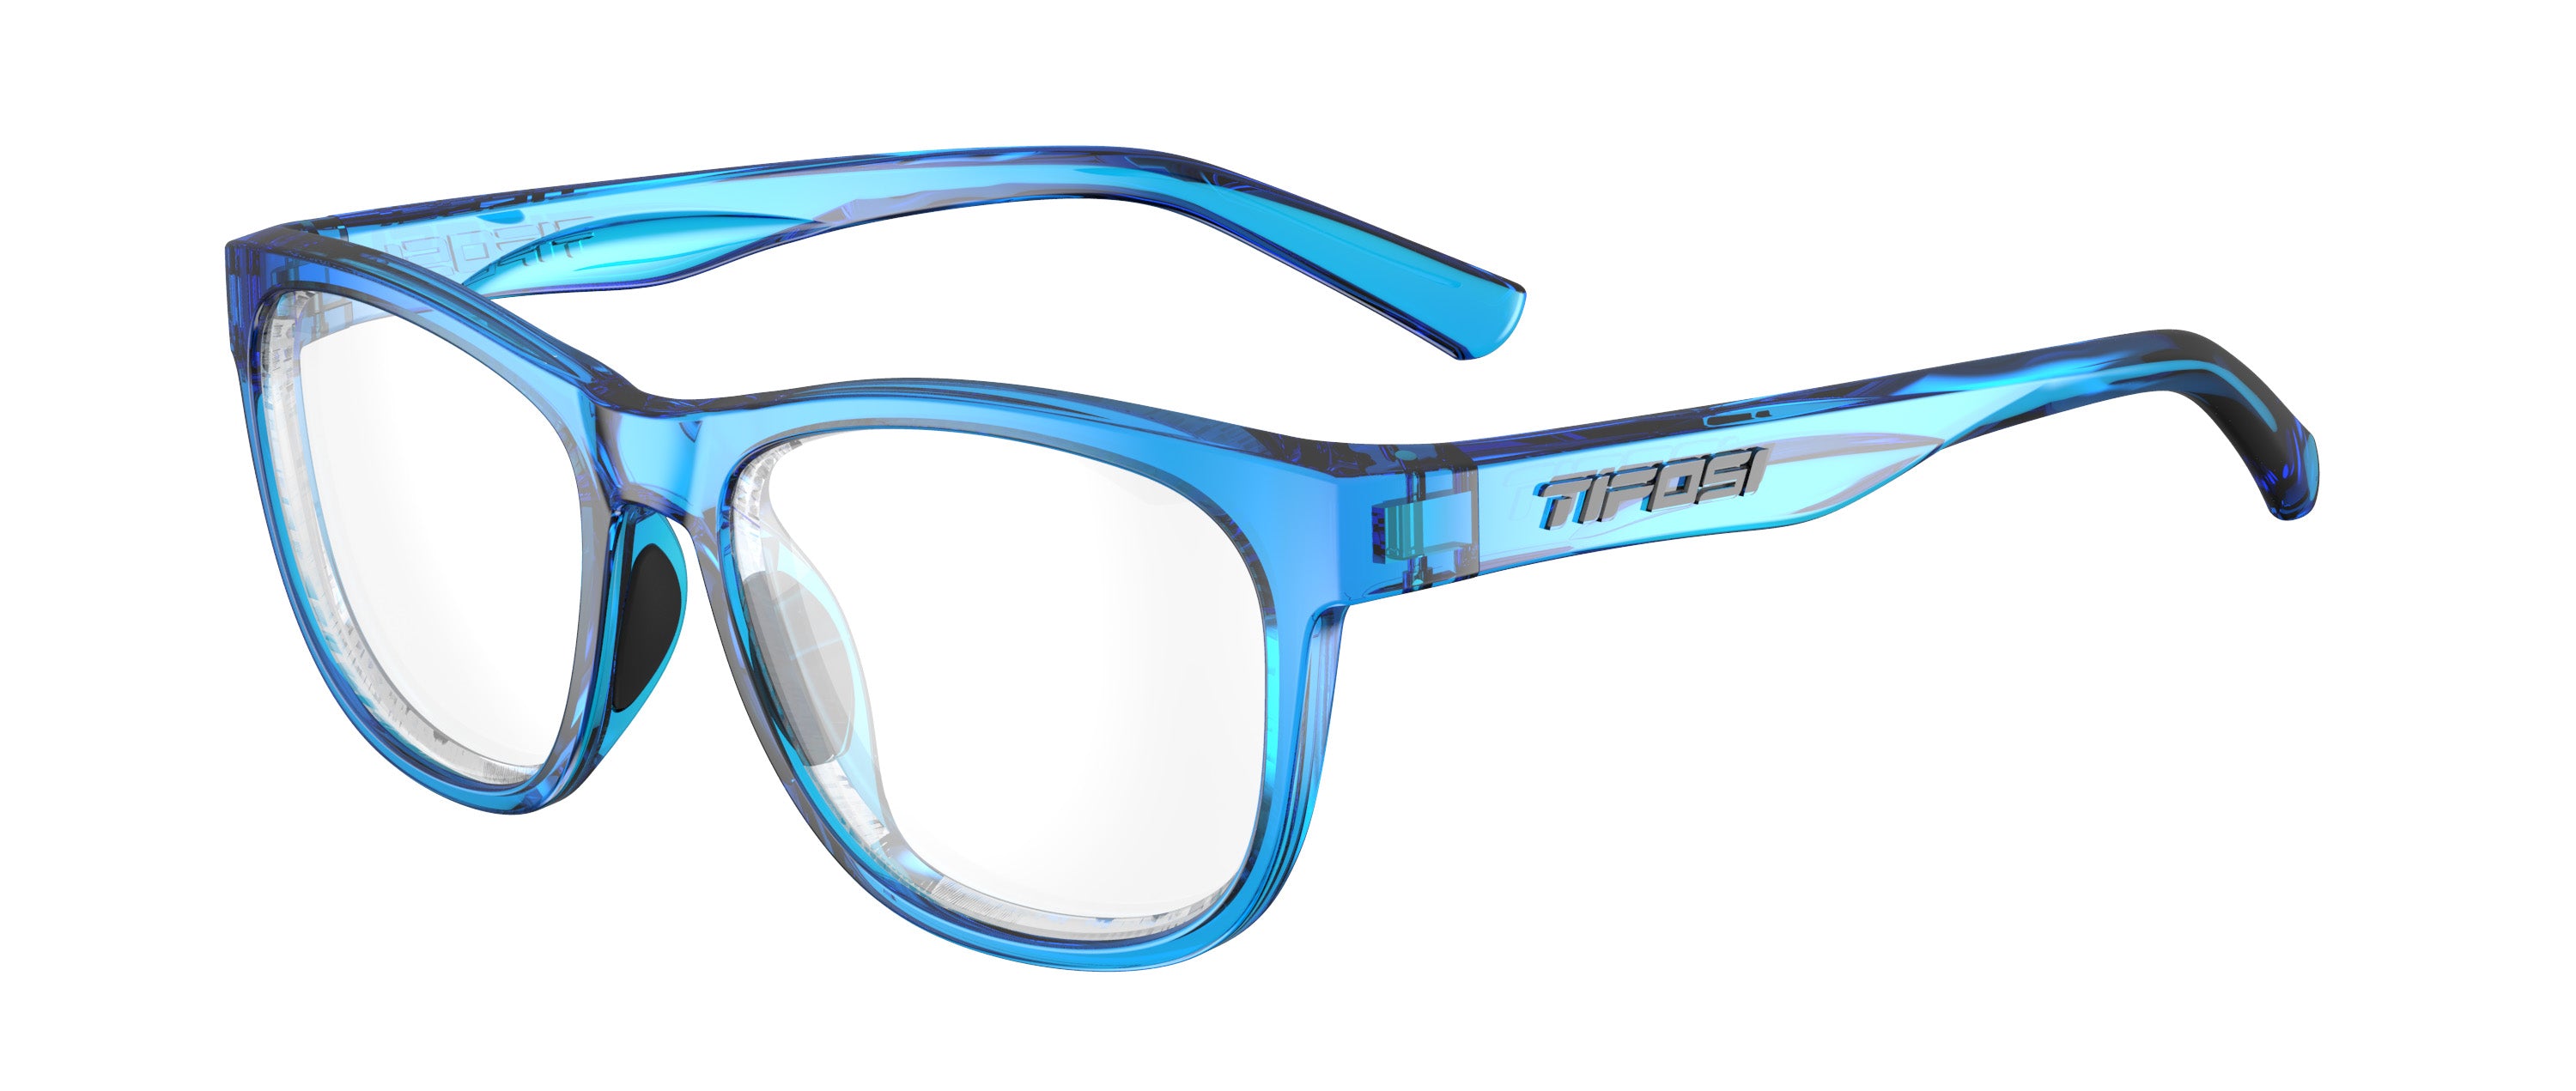 Swank Affordble Prescription Glasses & Running Eyewear - Tifosi Optics